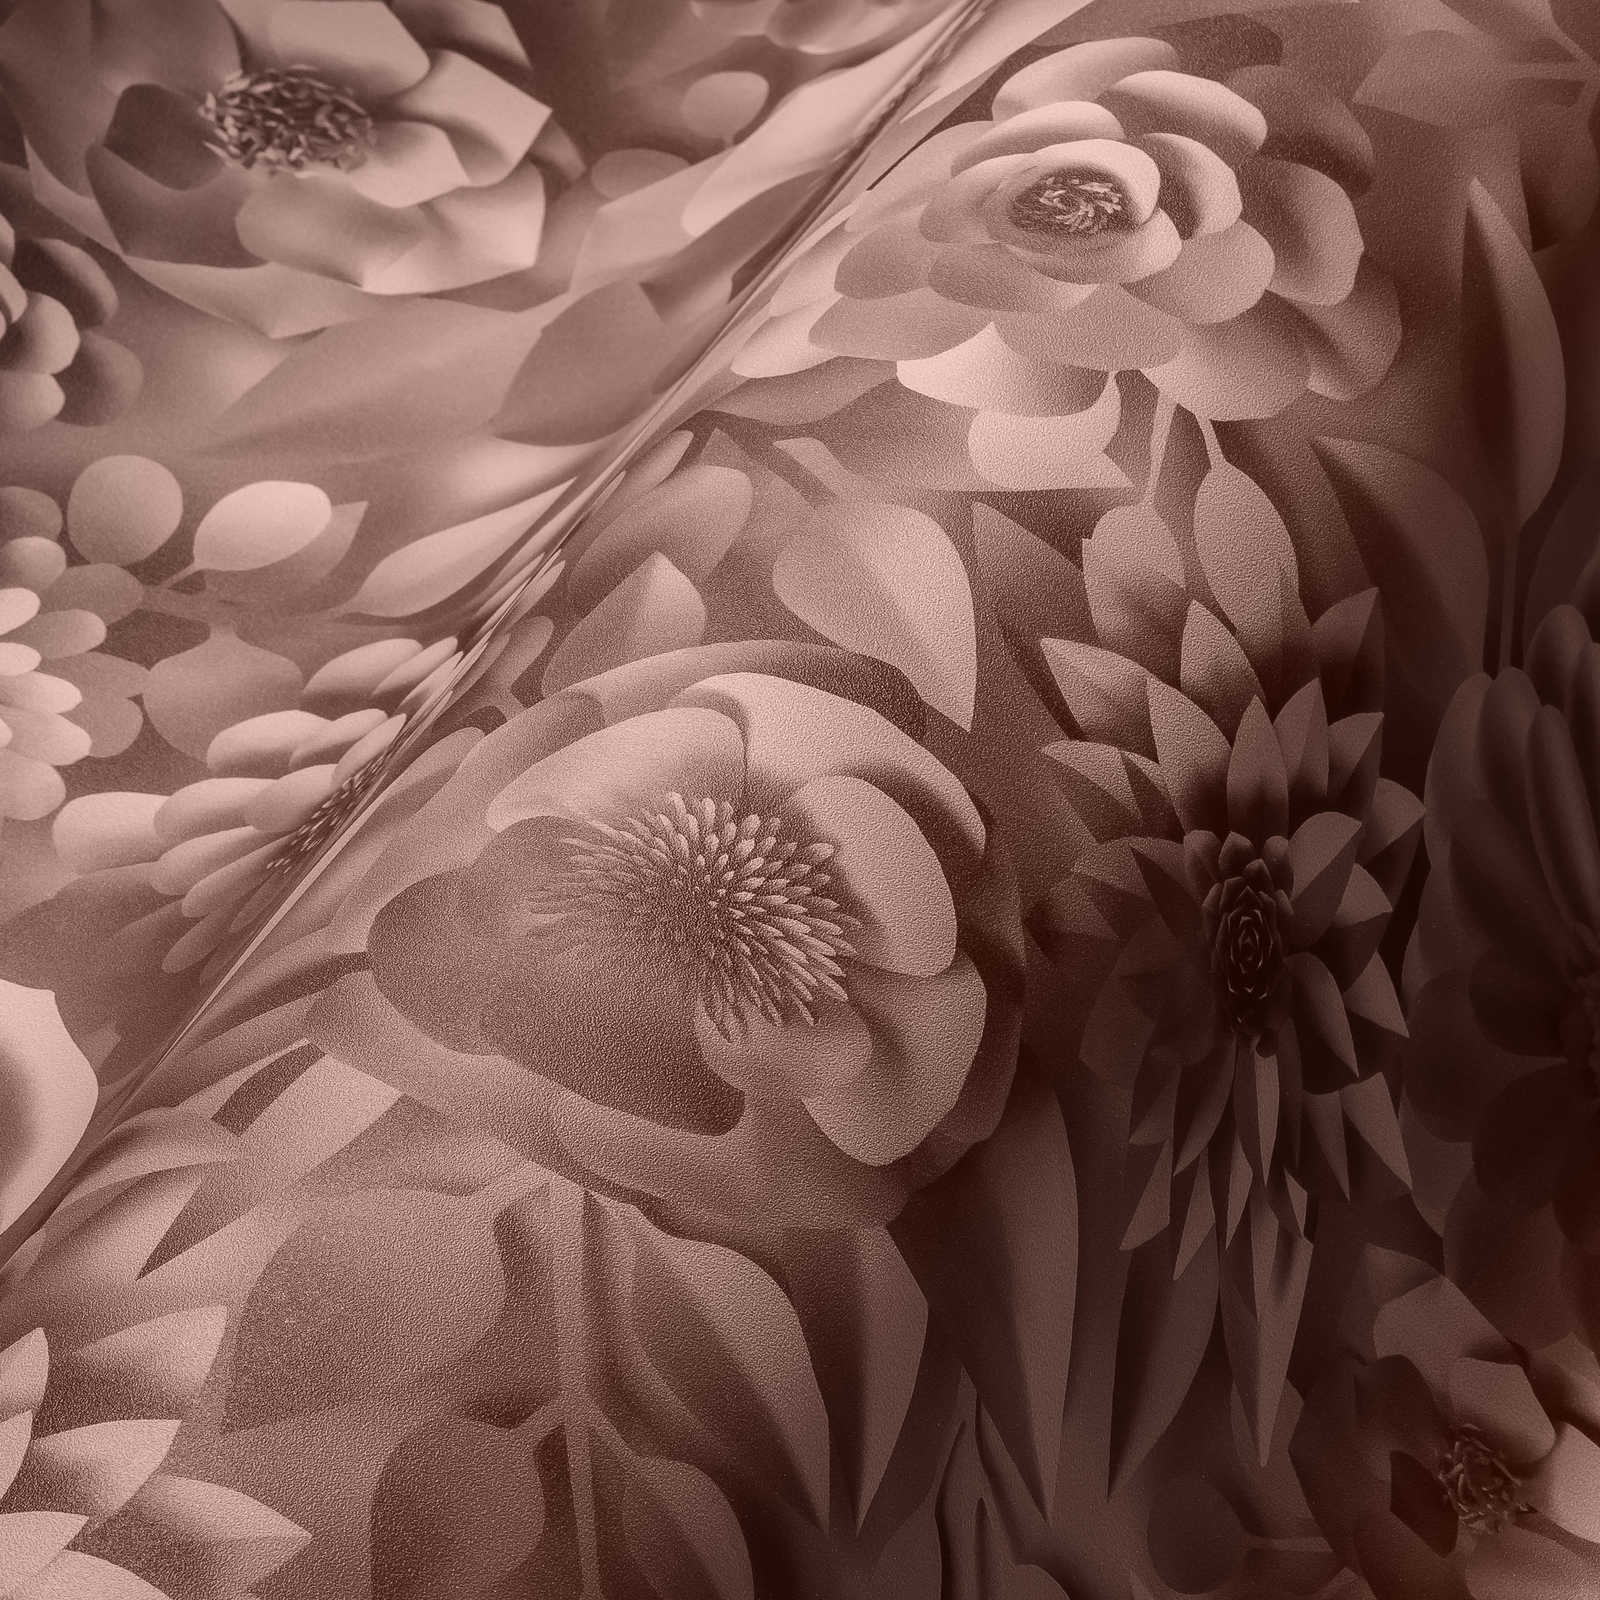             Papel pintado 3D con flores de papel, patrón floral gráfico - Rosa
        